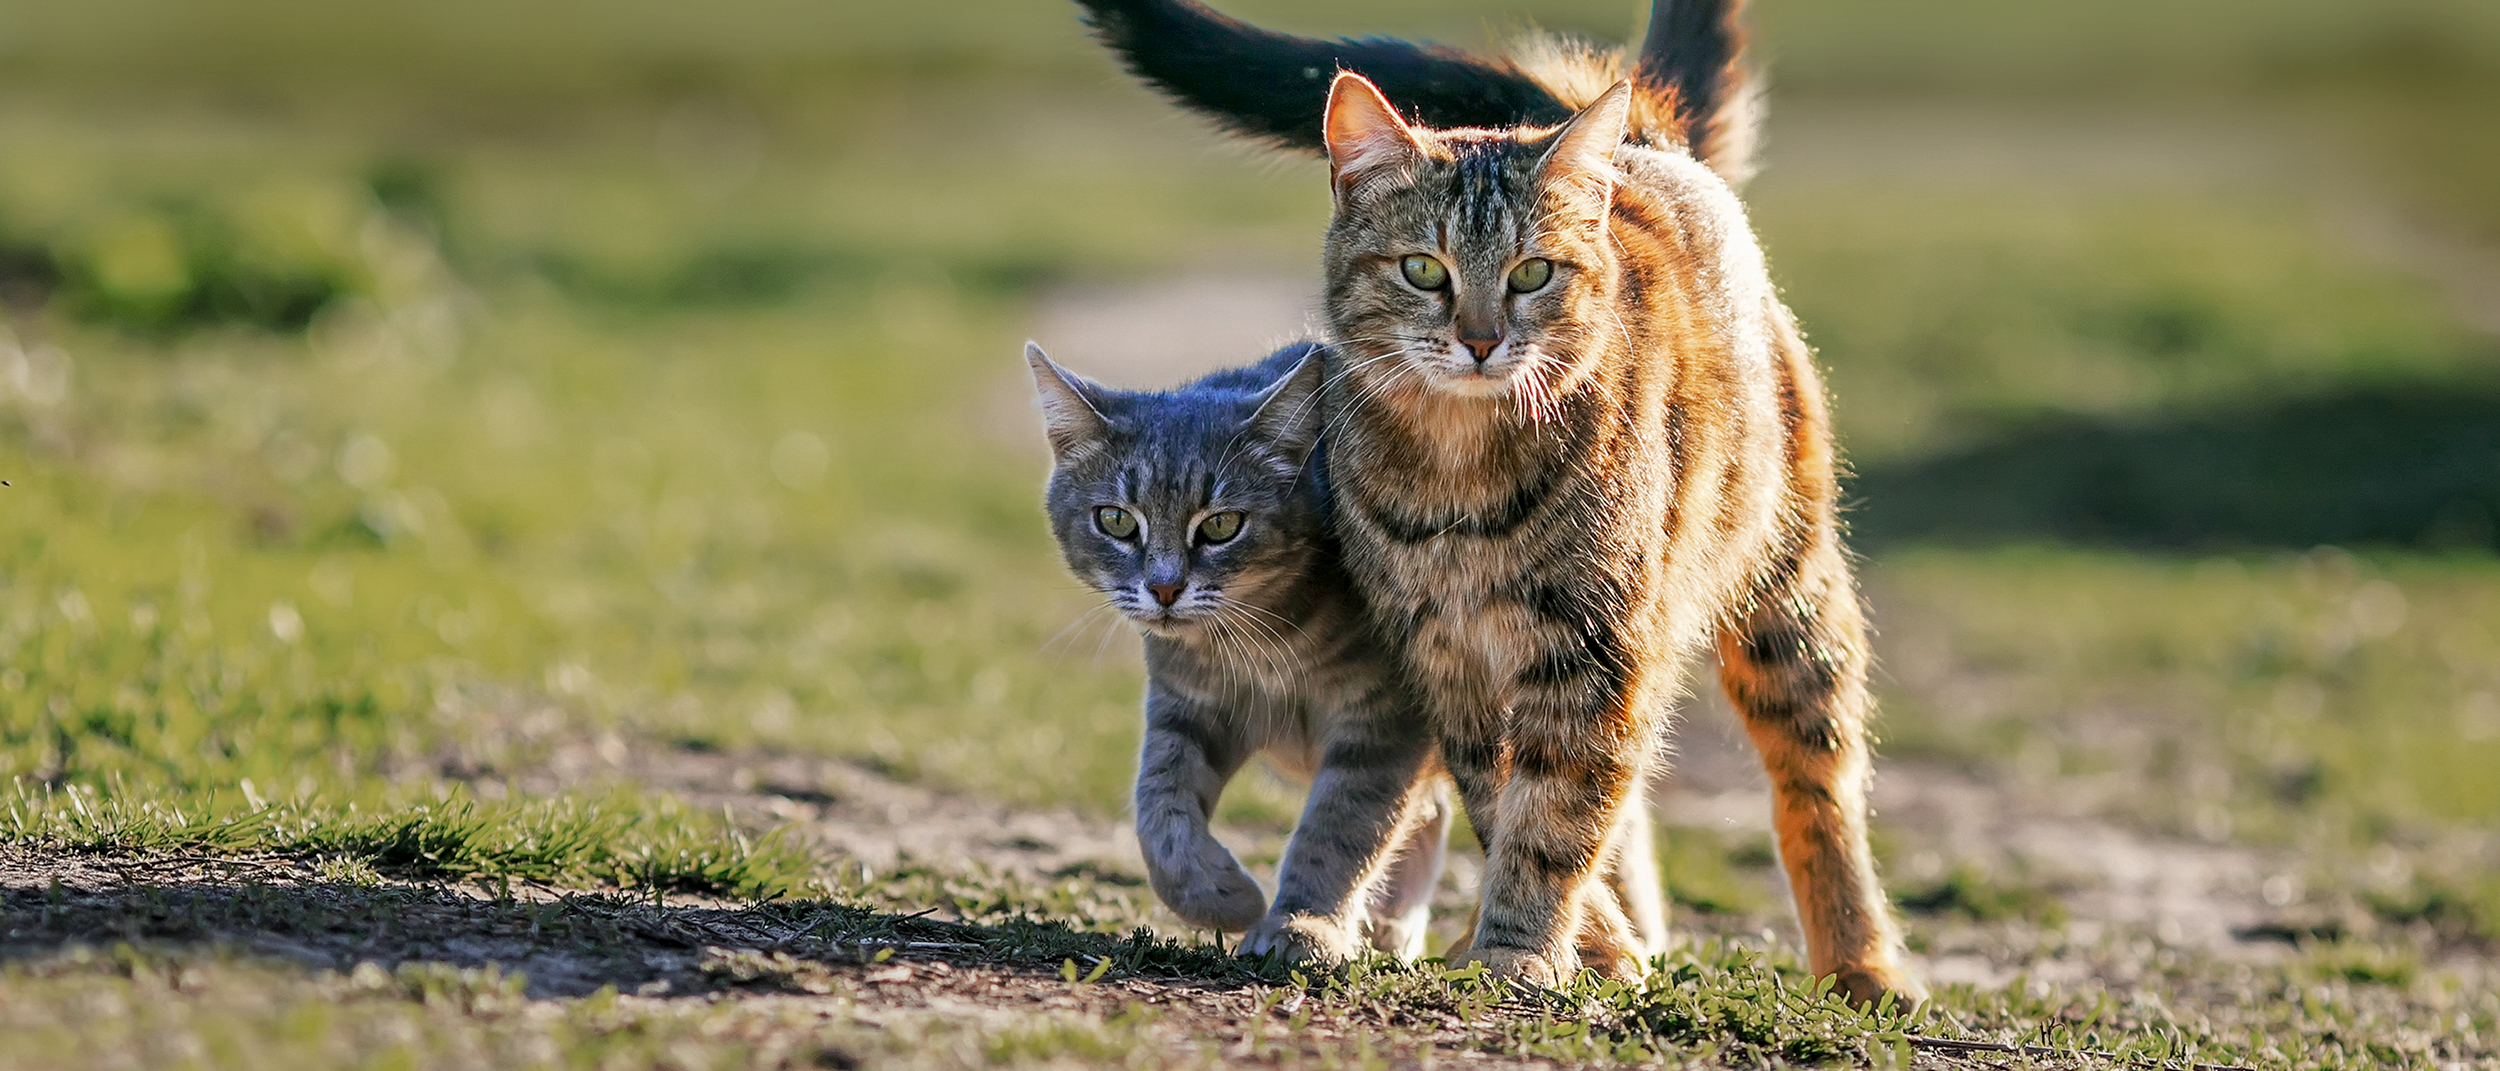 Dos gatos adultos caminando juntos en un campo.